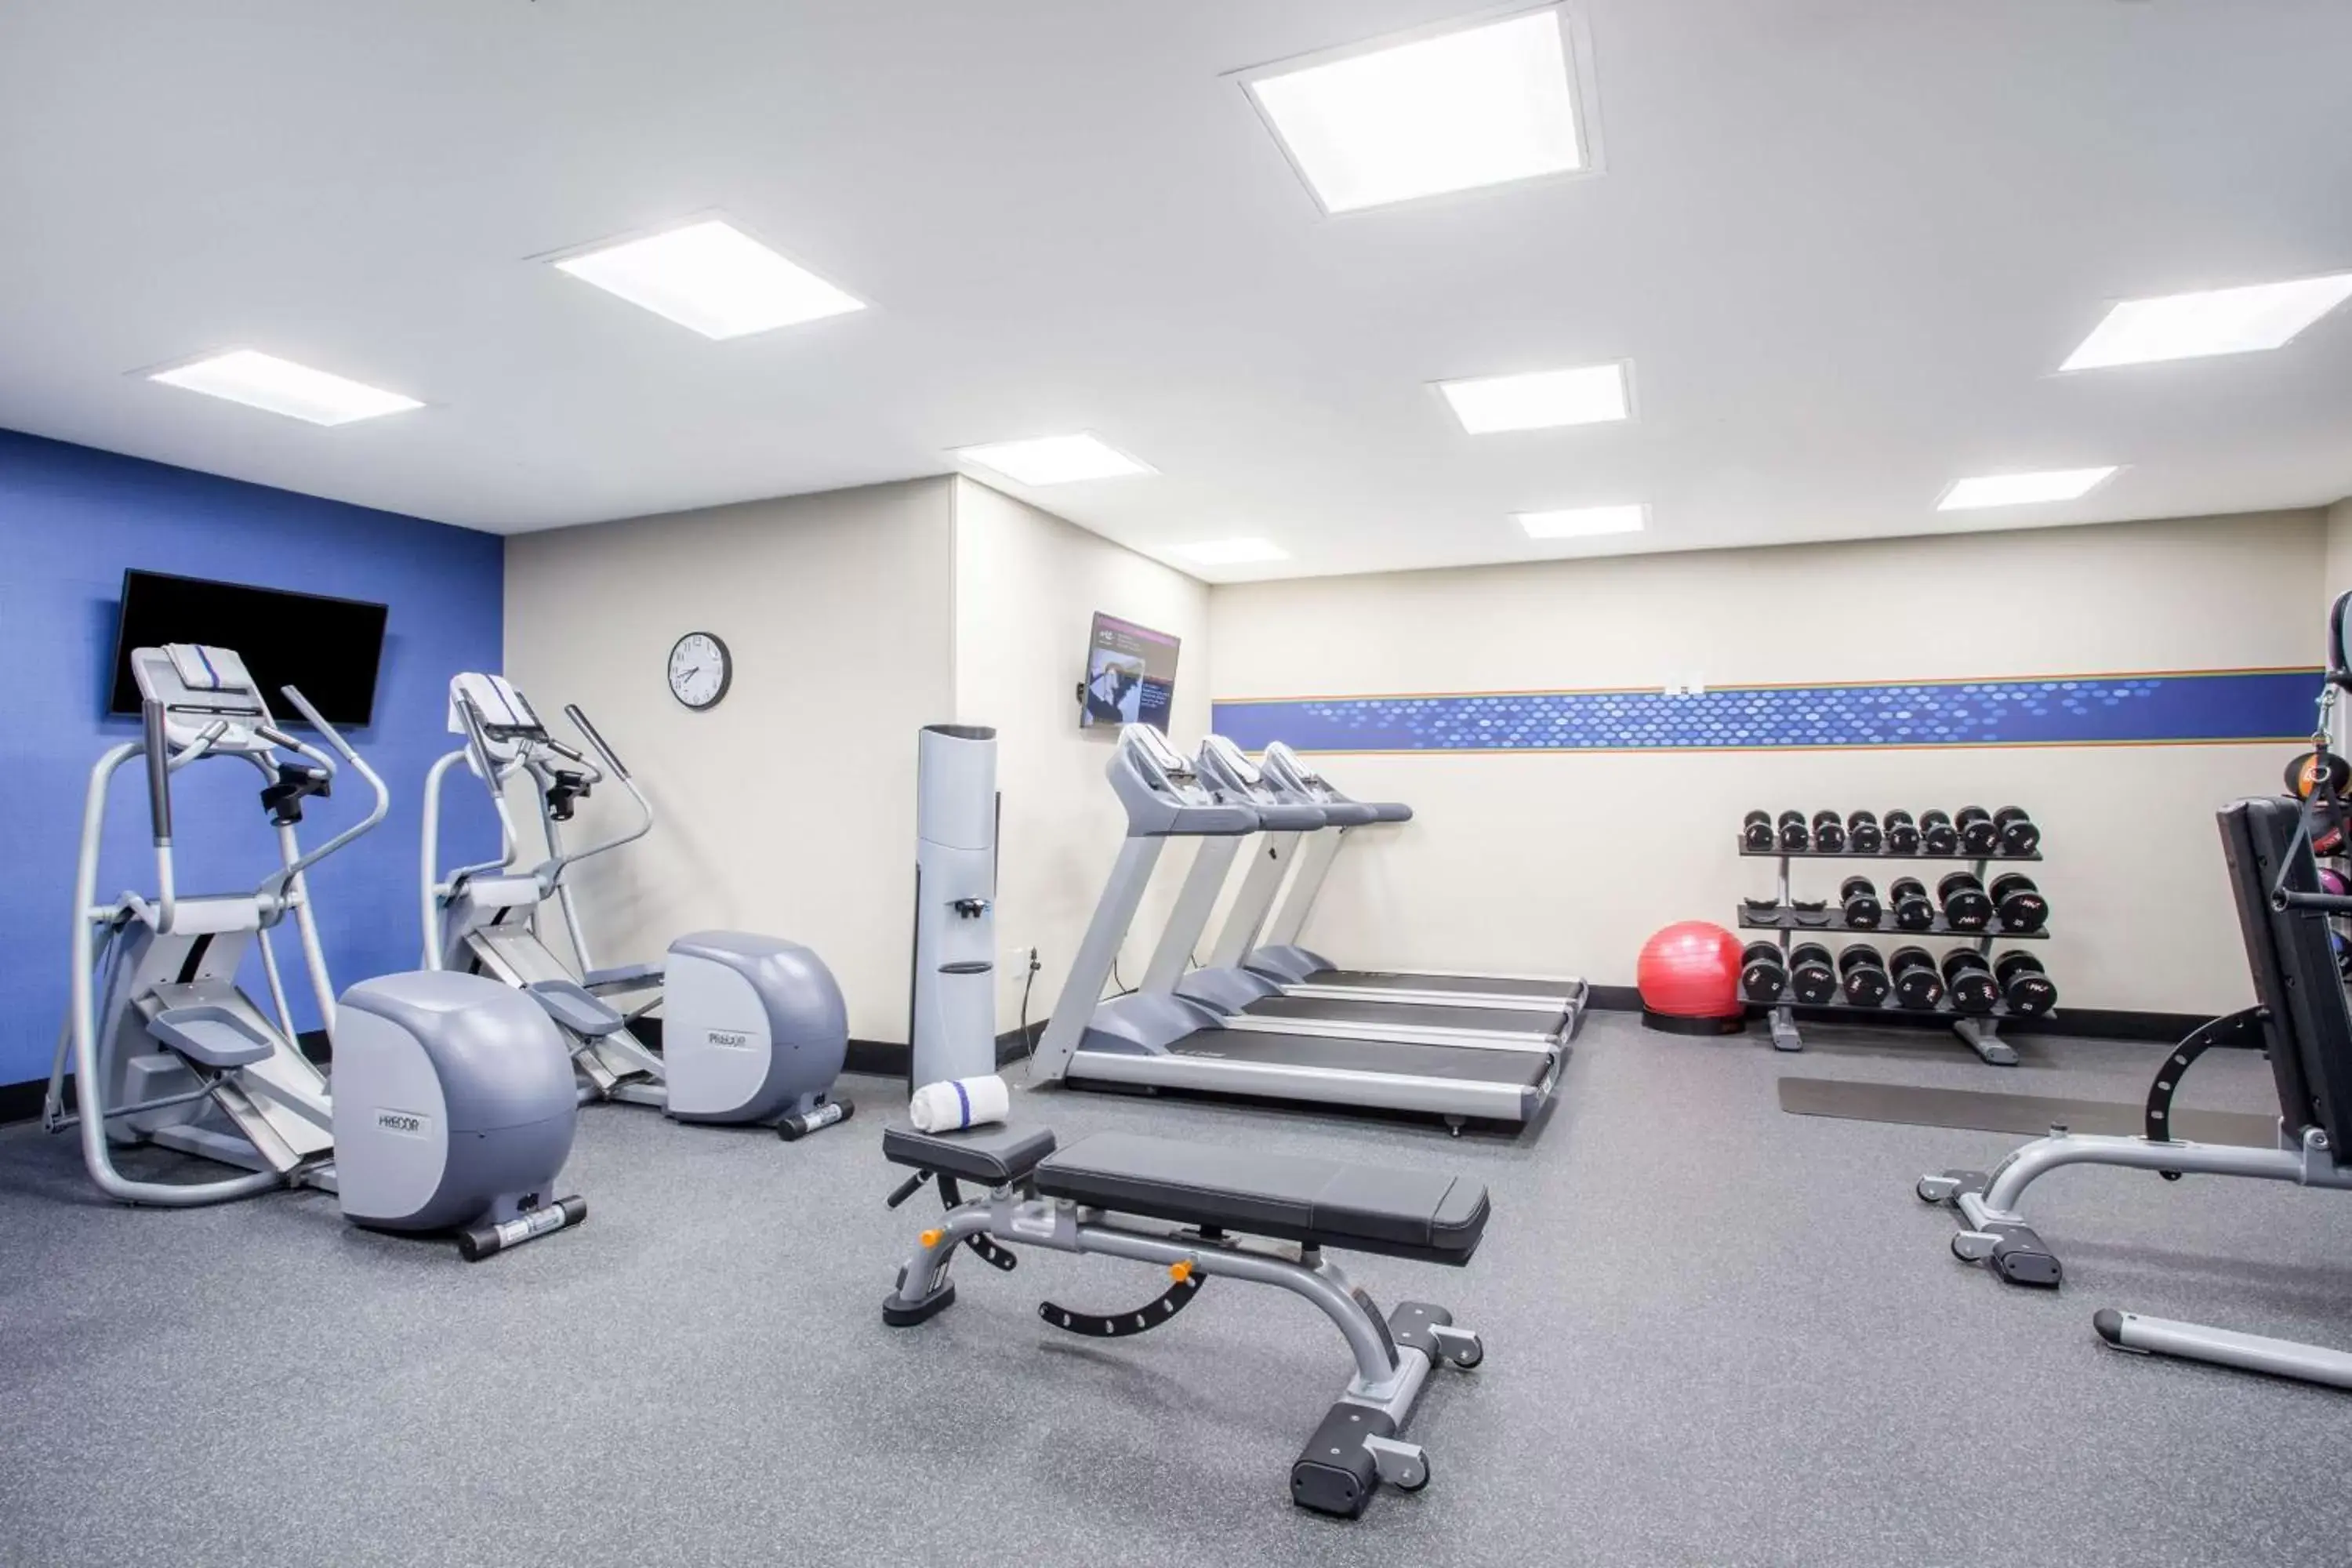 Fitness centre/facilities, Fitness Center/Facilities in Hampton Inn Rochester Penfield, Ny